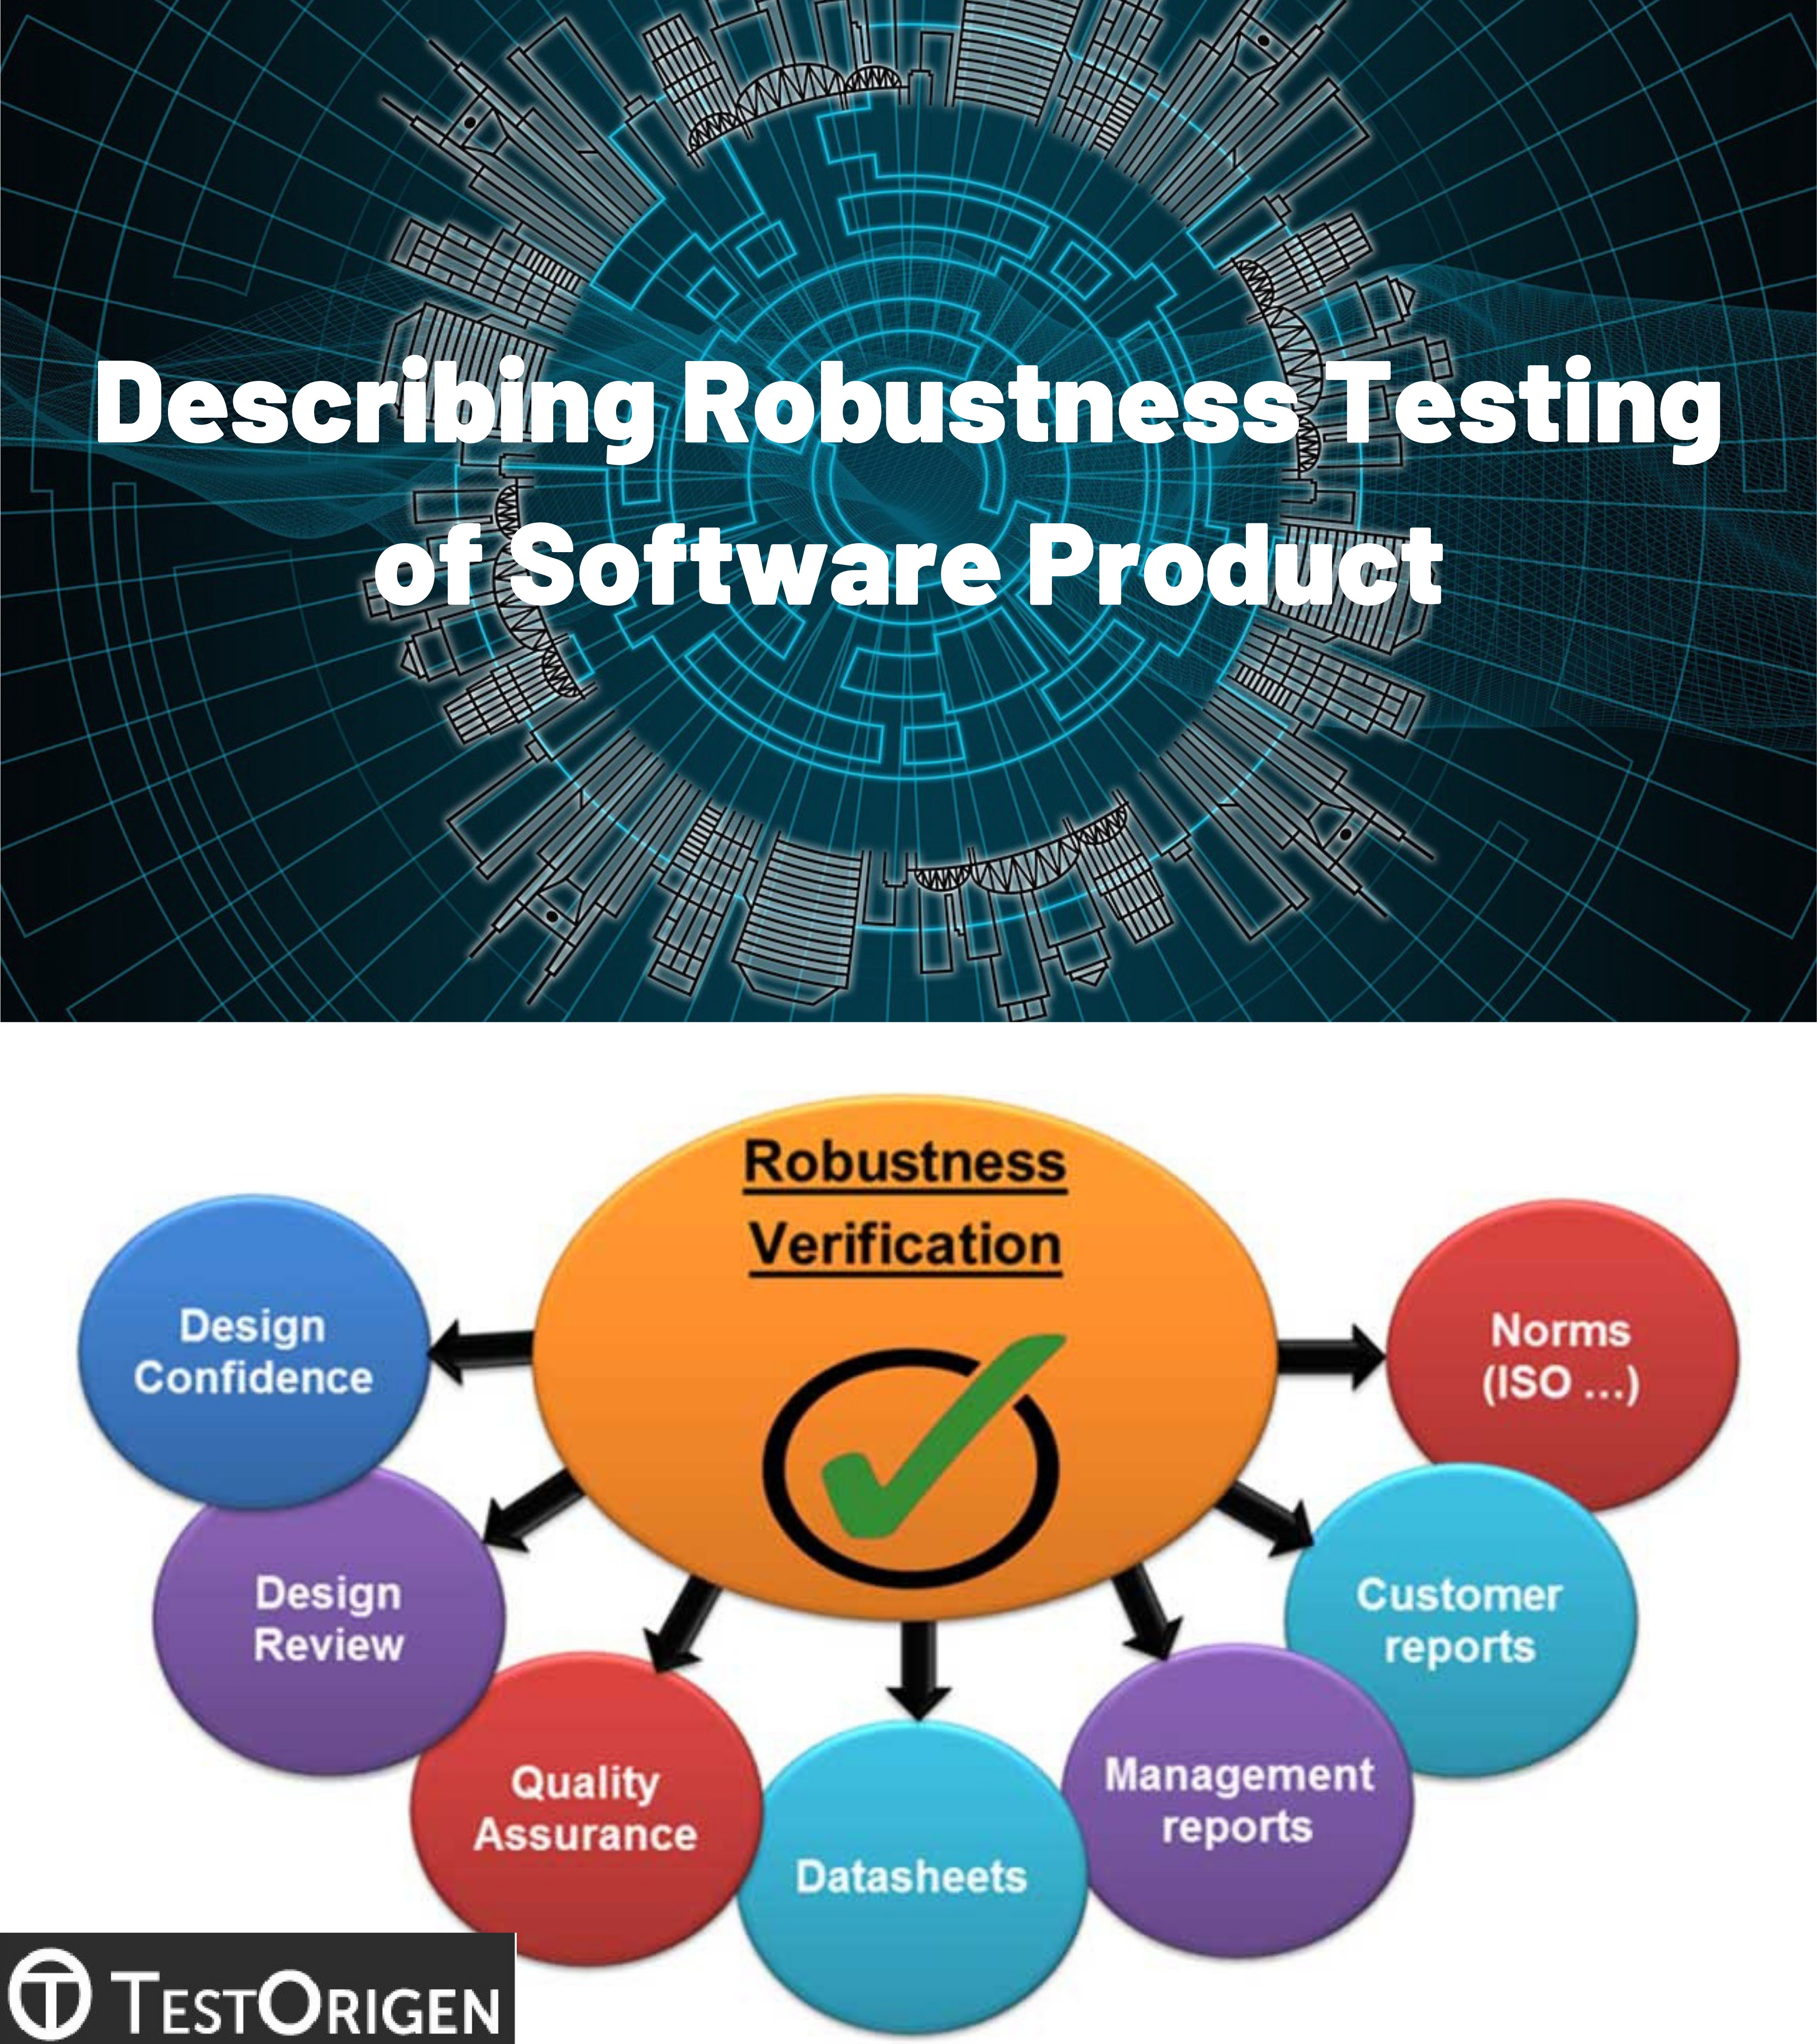 Describing Robustness Testing of Software Product. Robustness testing in software engineering